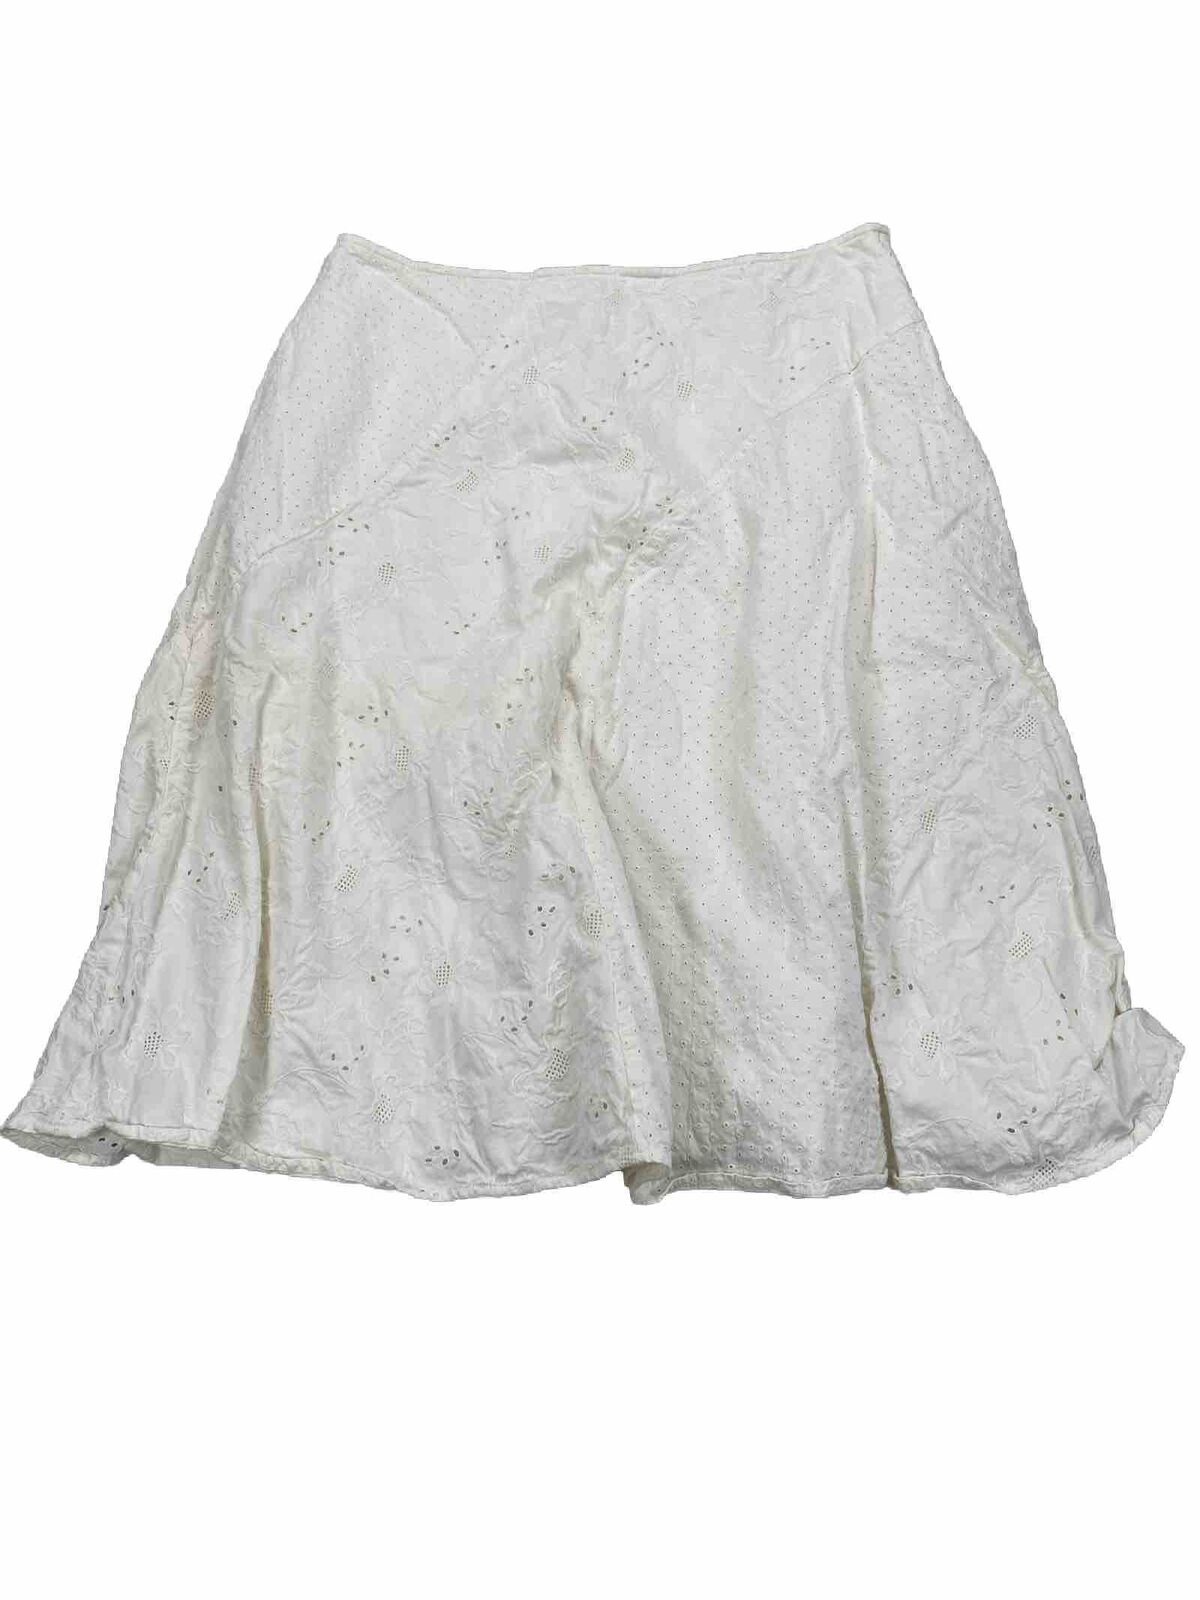 J. Jill Women's Ivory Floral Lace Cotton A-Line Skirt - 14